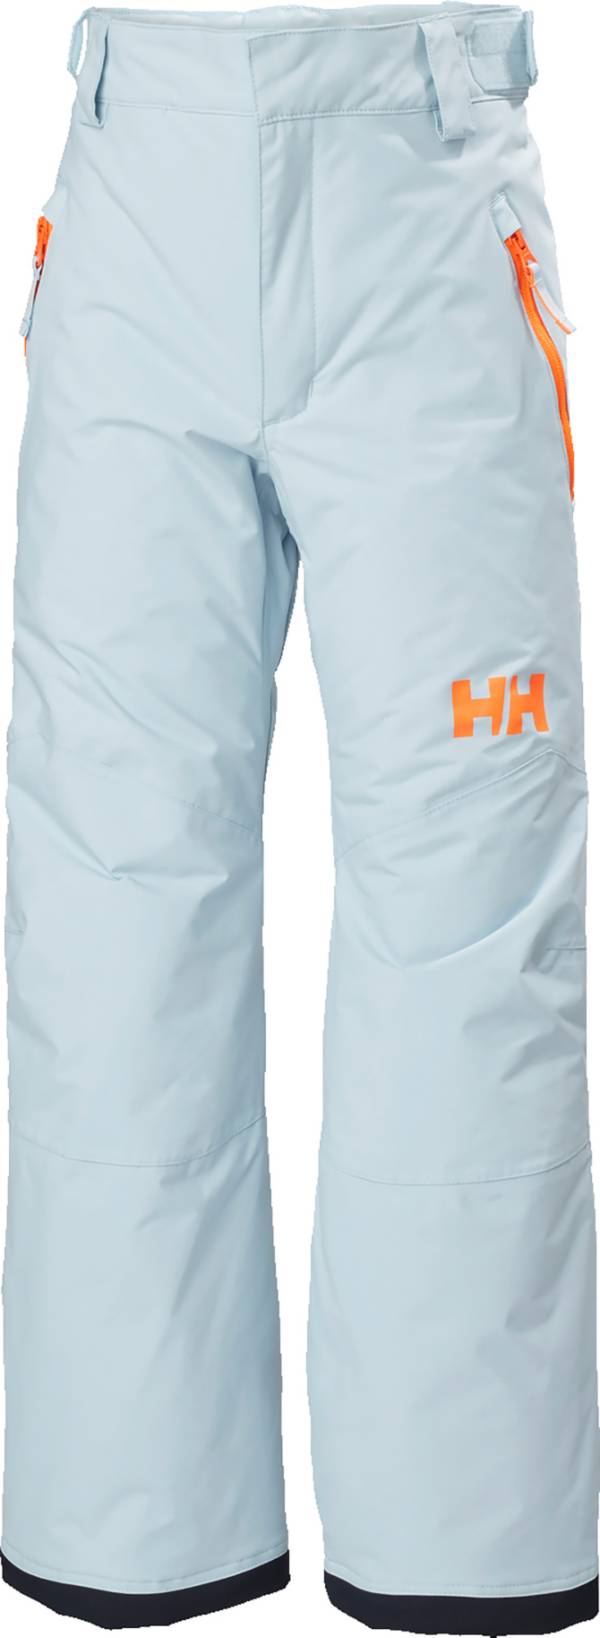 Helly Hansen Junior's Legendary Pants product image